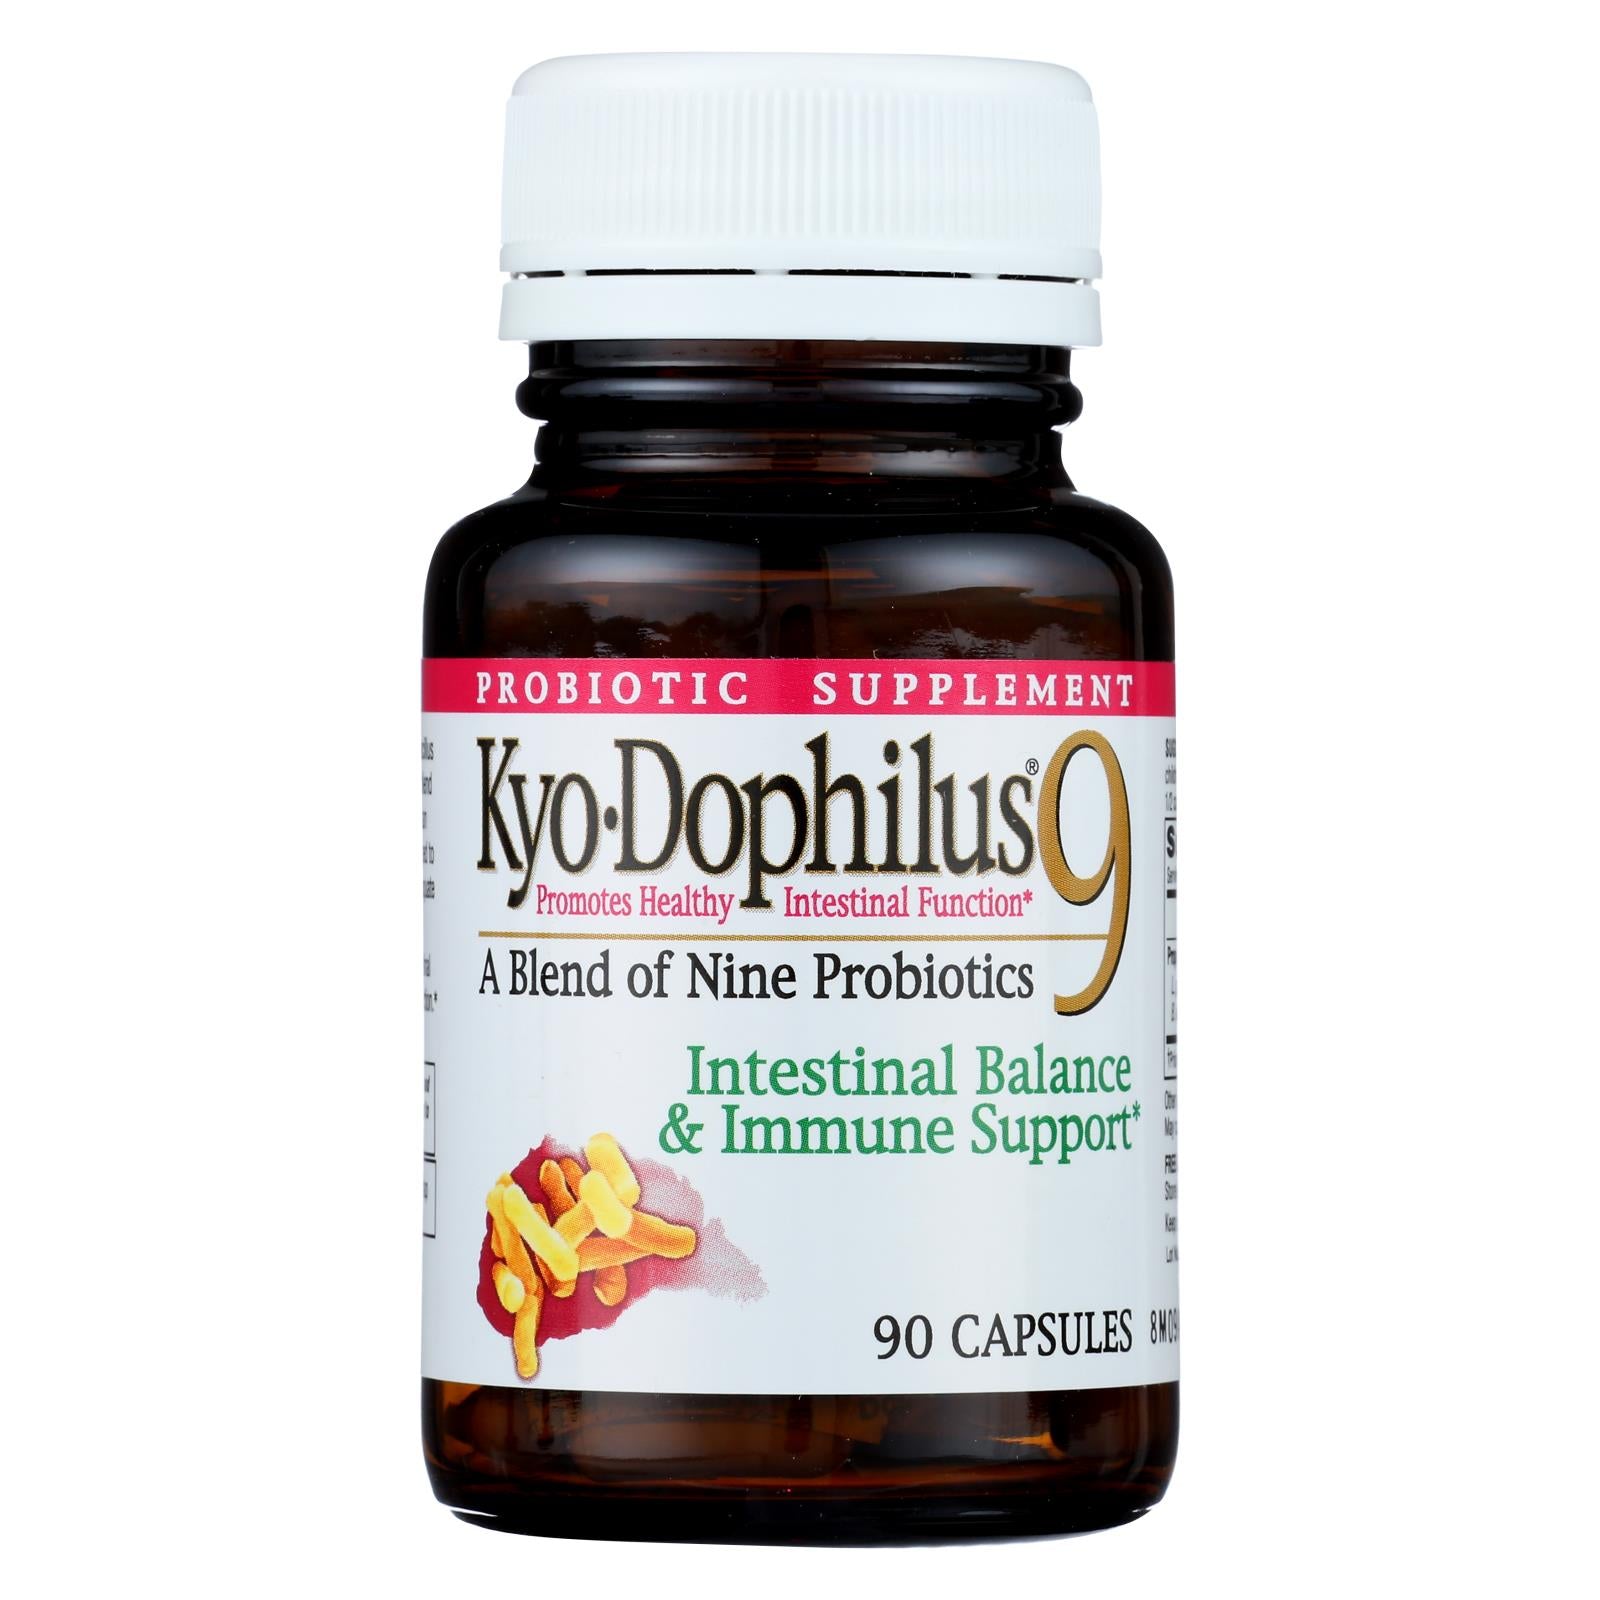 Kyolic - Kyo-dophilus 9 - 90 Capsules